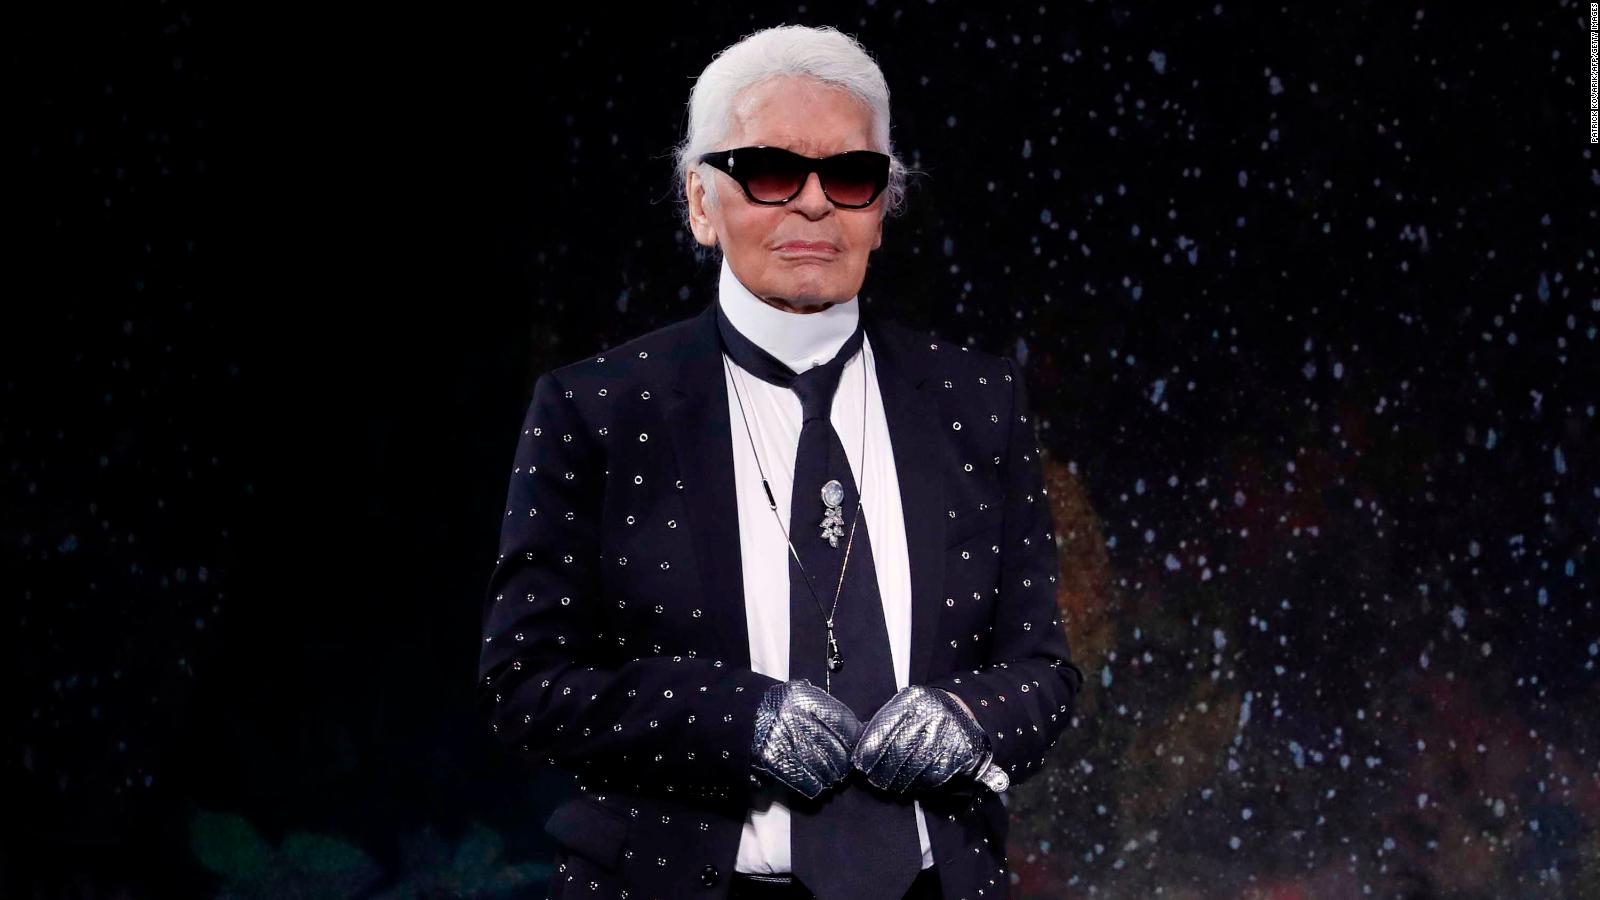 Karl Lagerfeld's enduring influence, beyond fashion weeks - CNN Style